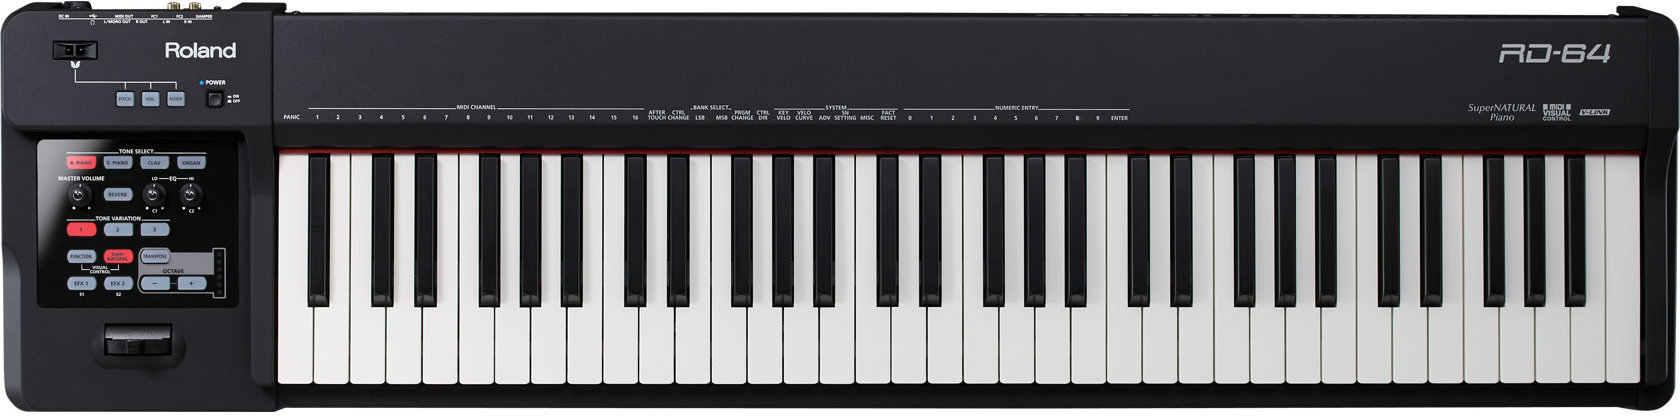 Színpadi zongora Roland RD 64 Digital piano